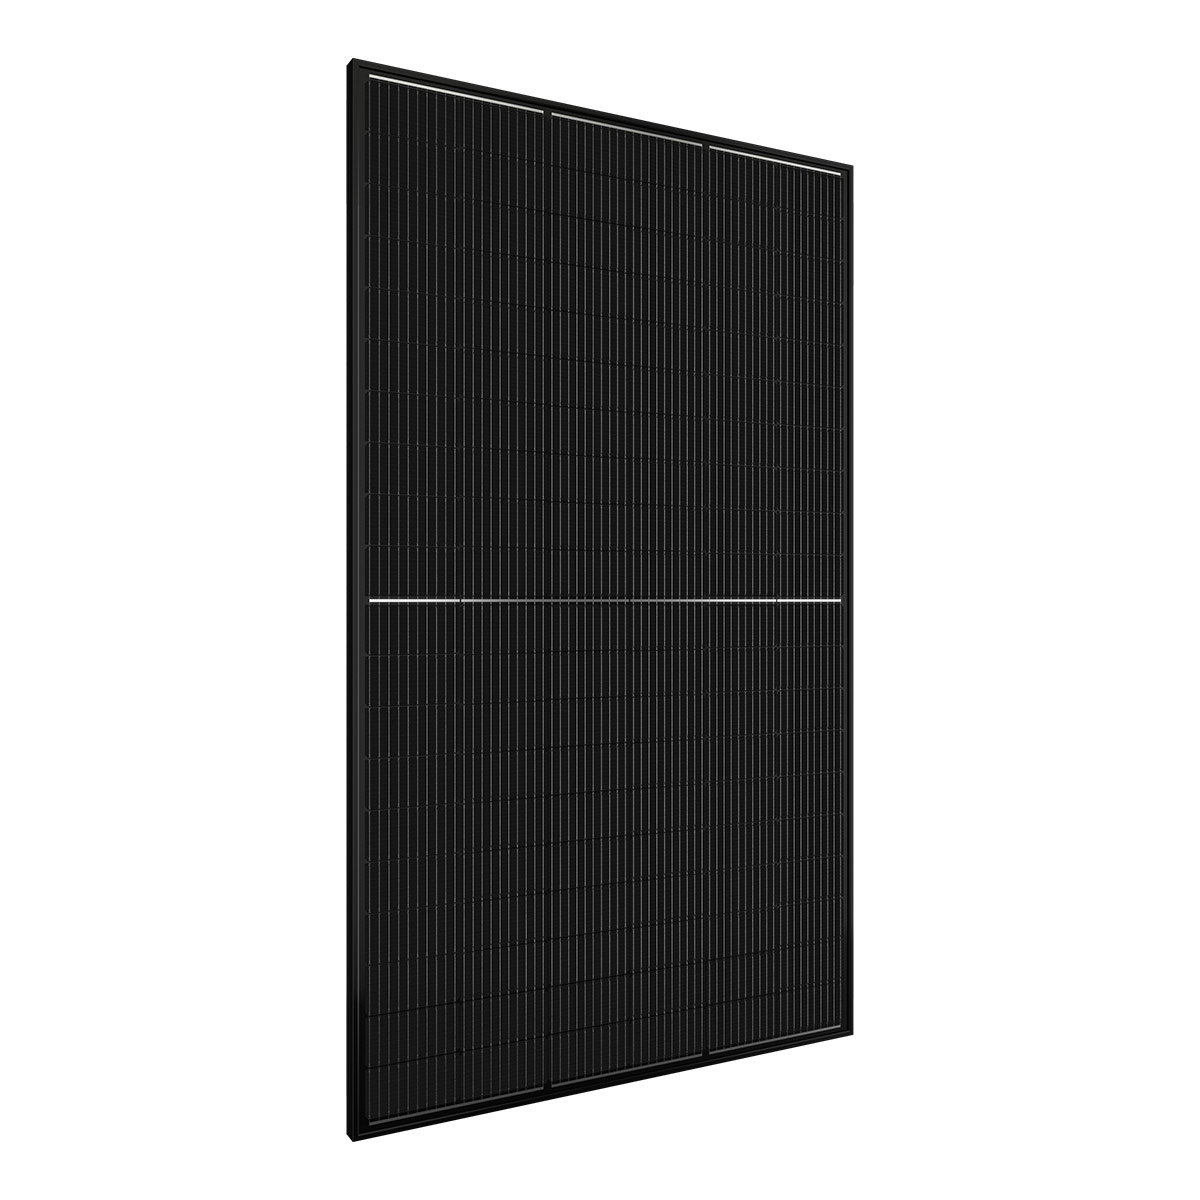 TommaTech 440Wp 120PM M10 Dark Series Solar Panel